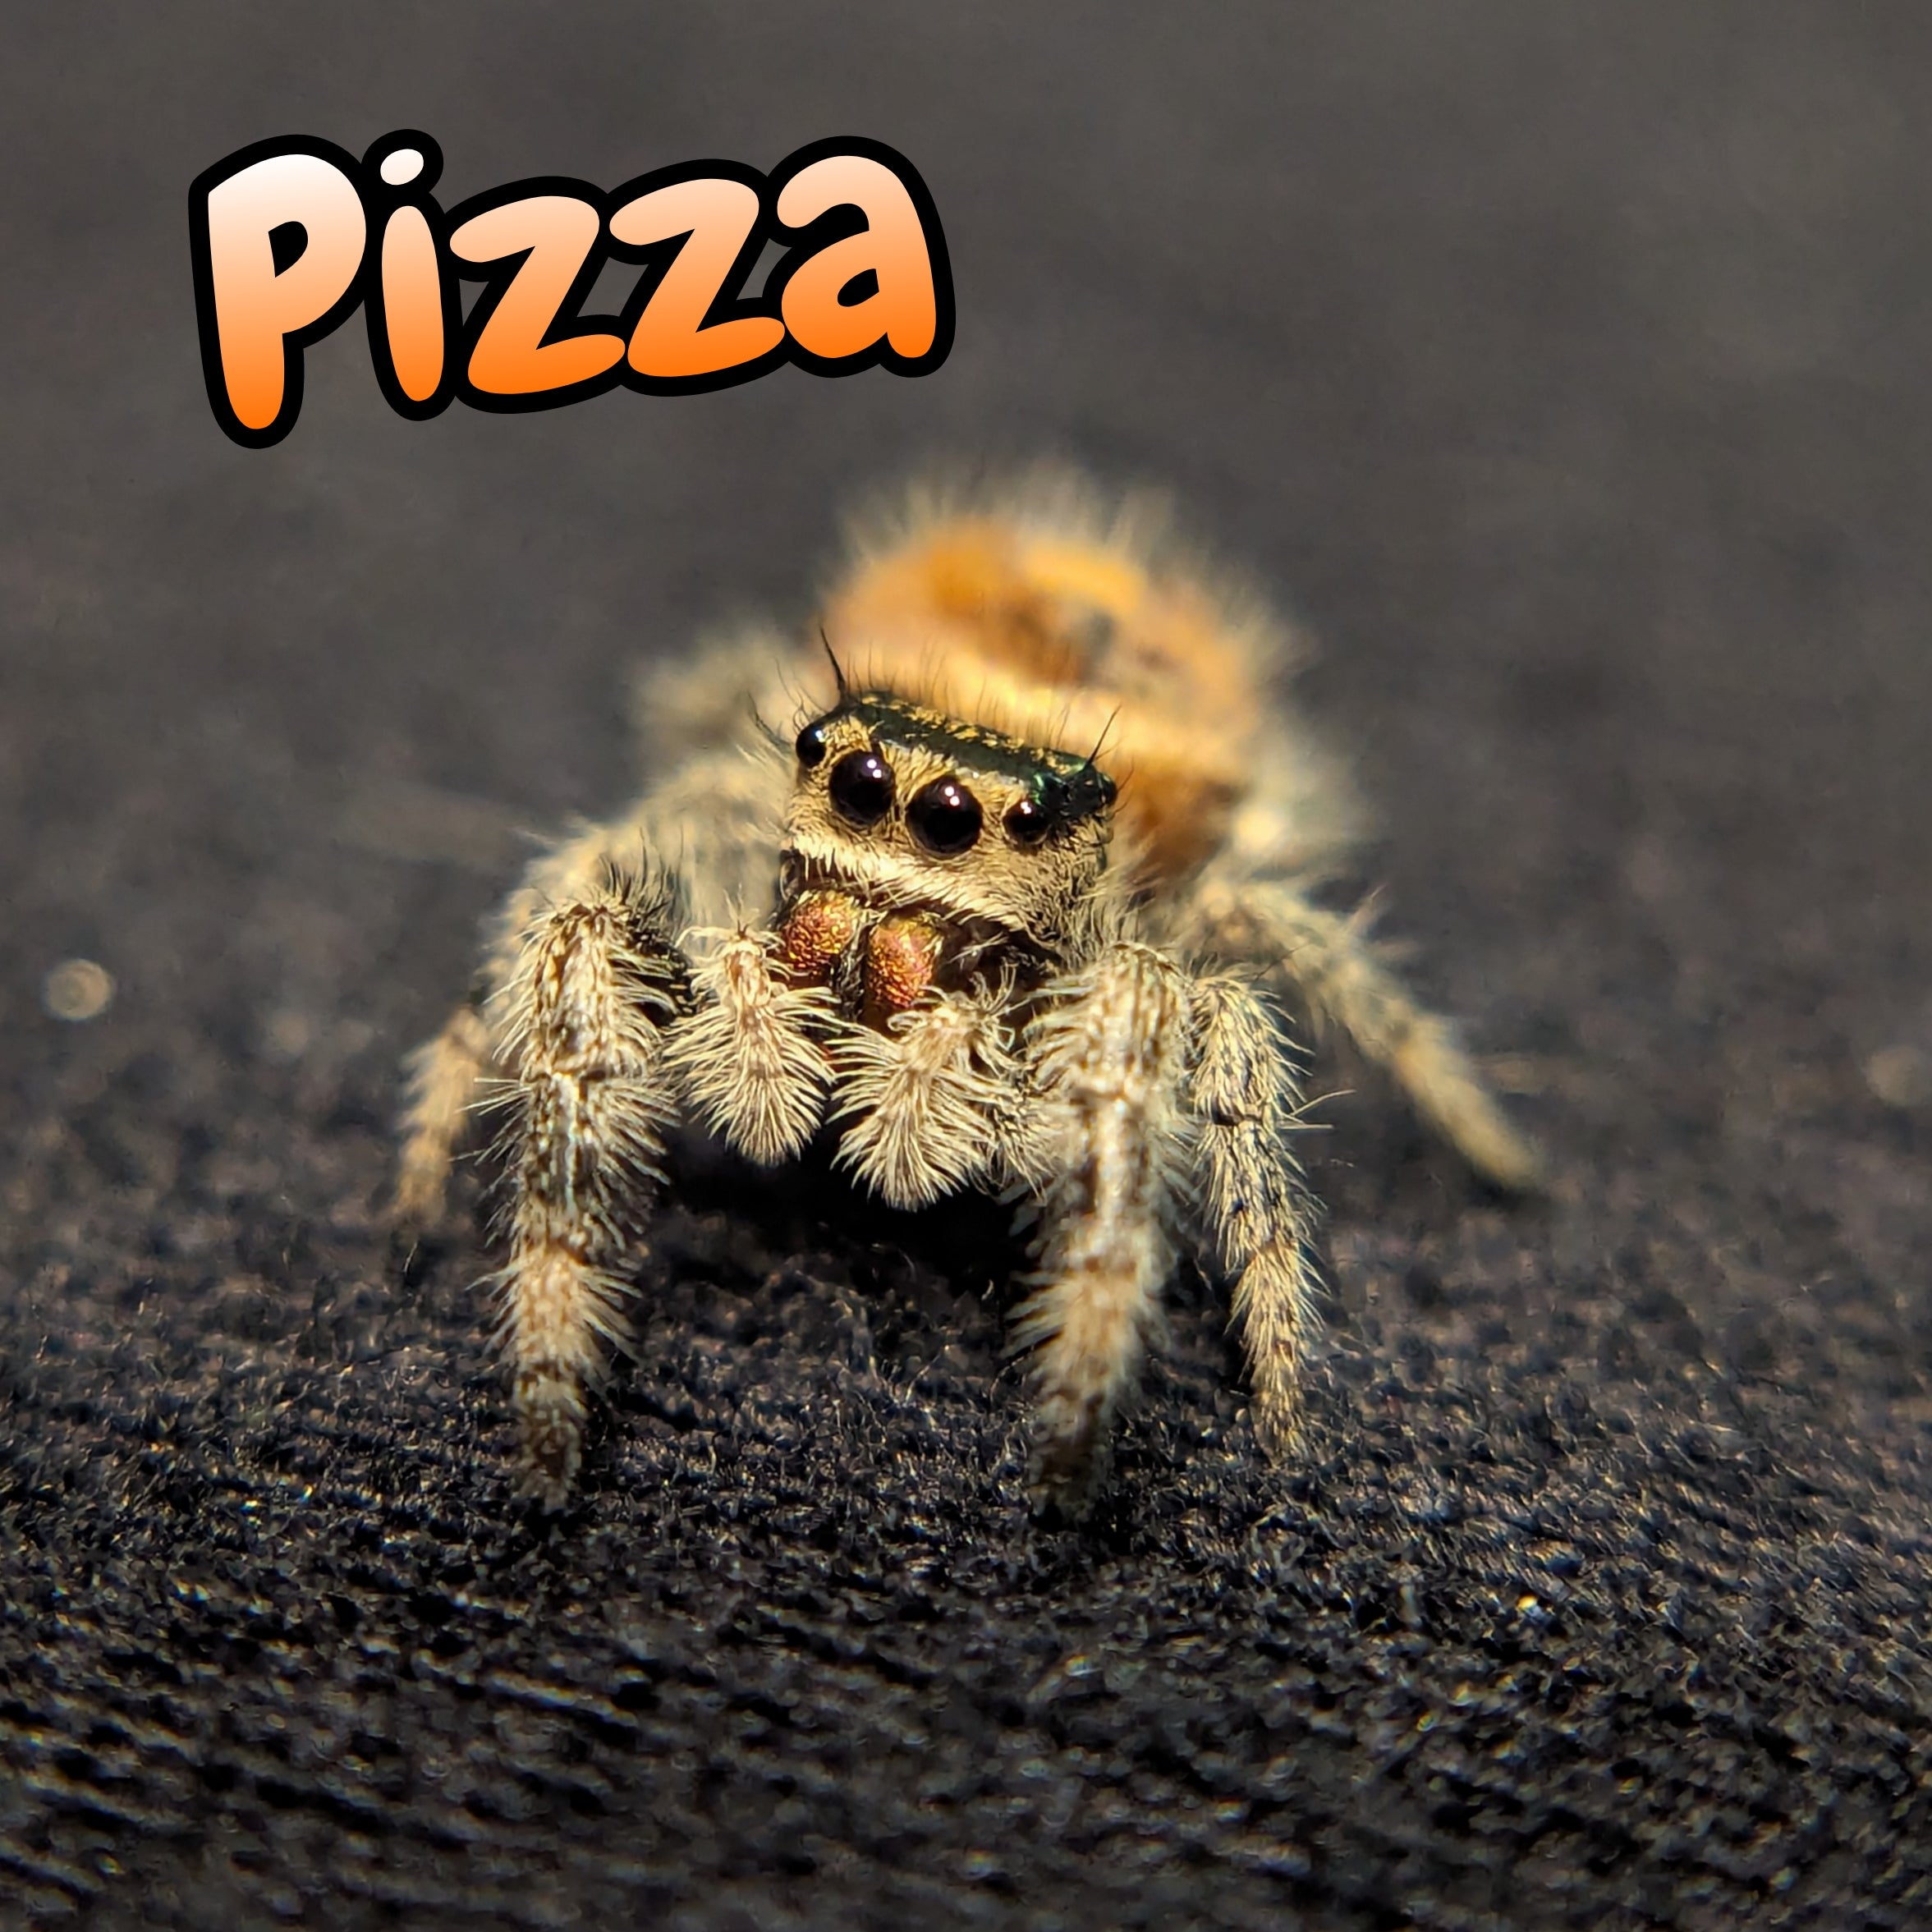 Regal Jumping Spider "Pizza"